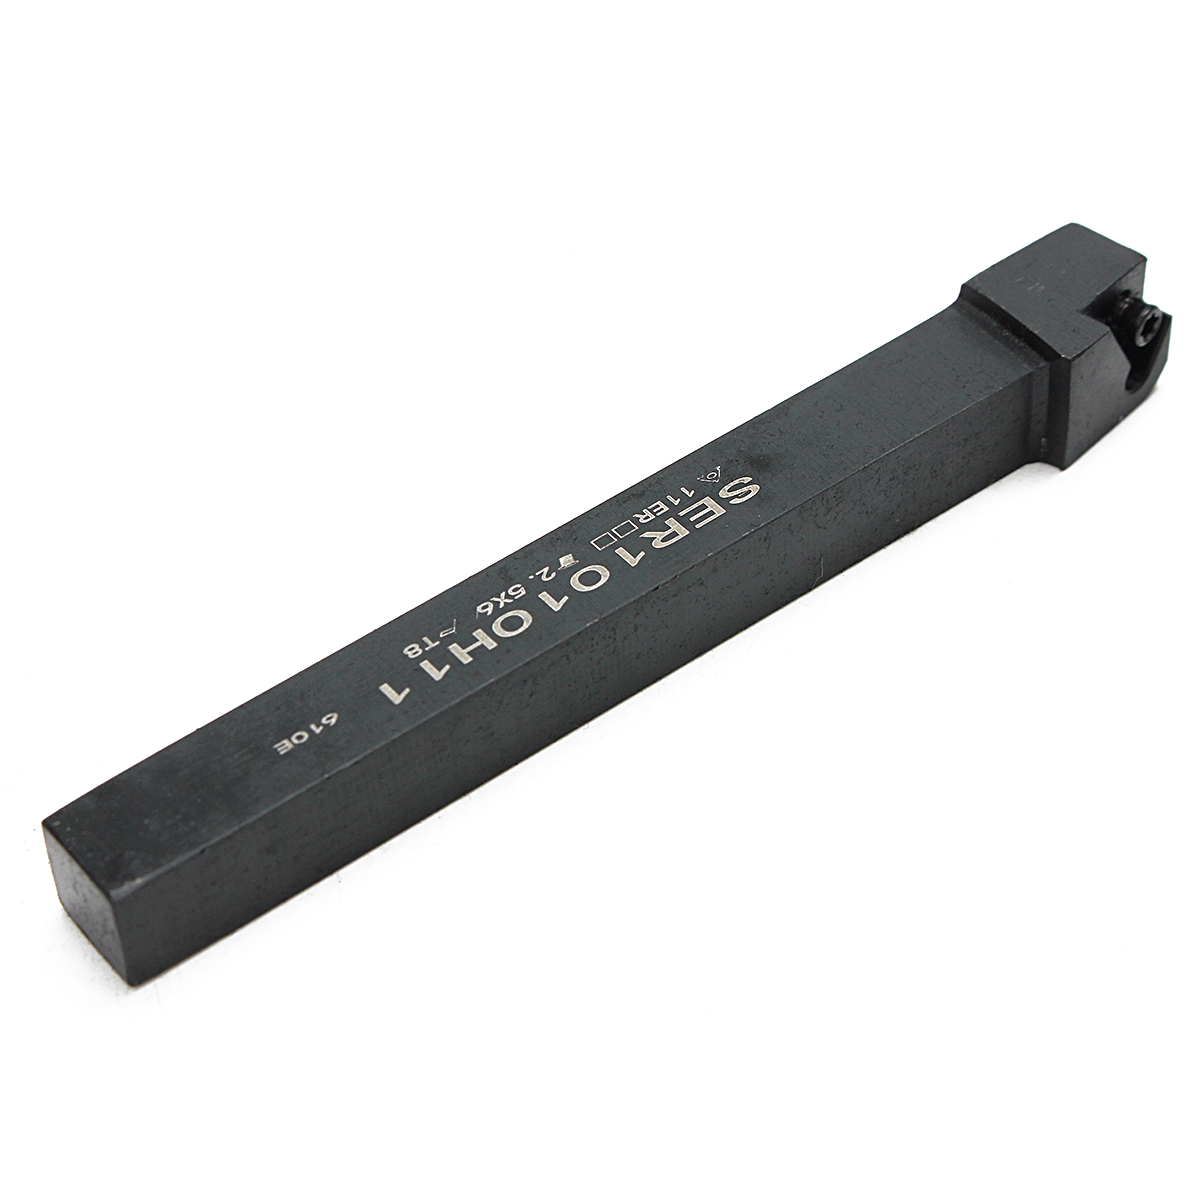 7pcs-10mm-Shank-Lathe-Turning-Tool-Holder-Boring-Bar-with-7pcs-VP15TF-Carbide-Inserts-1113594-6